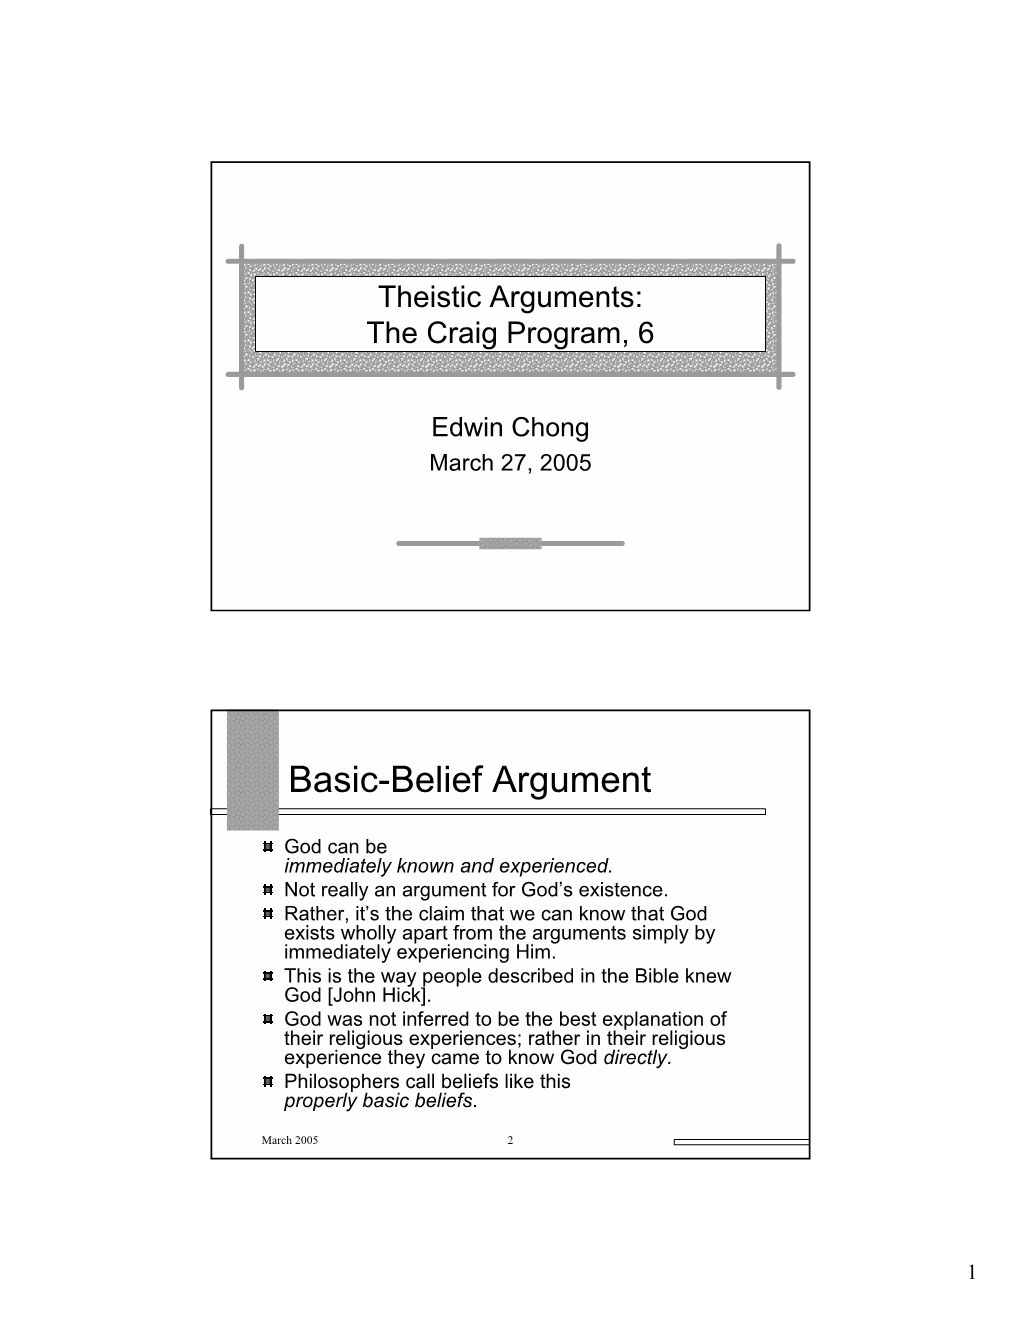 Basic-Belief Argument